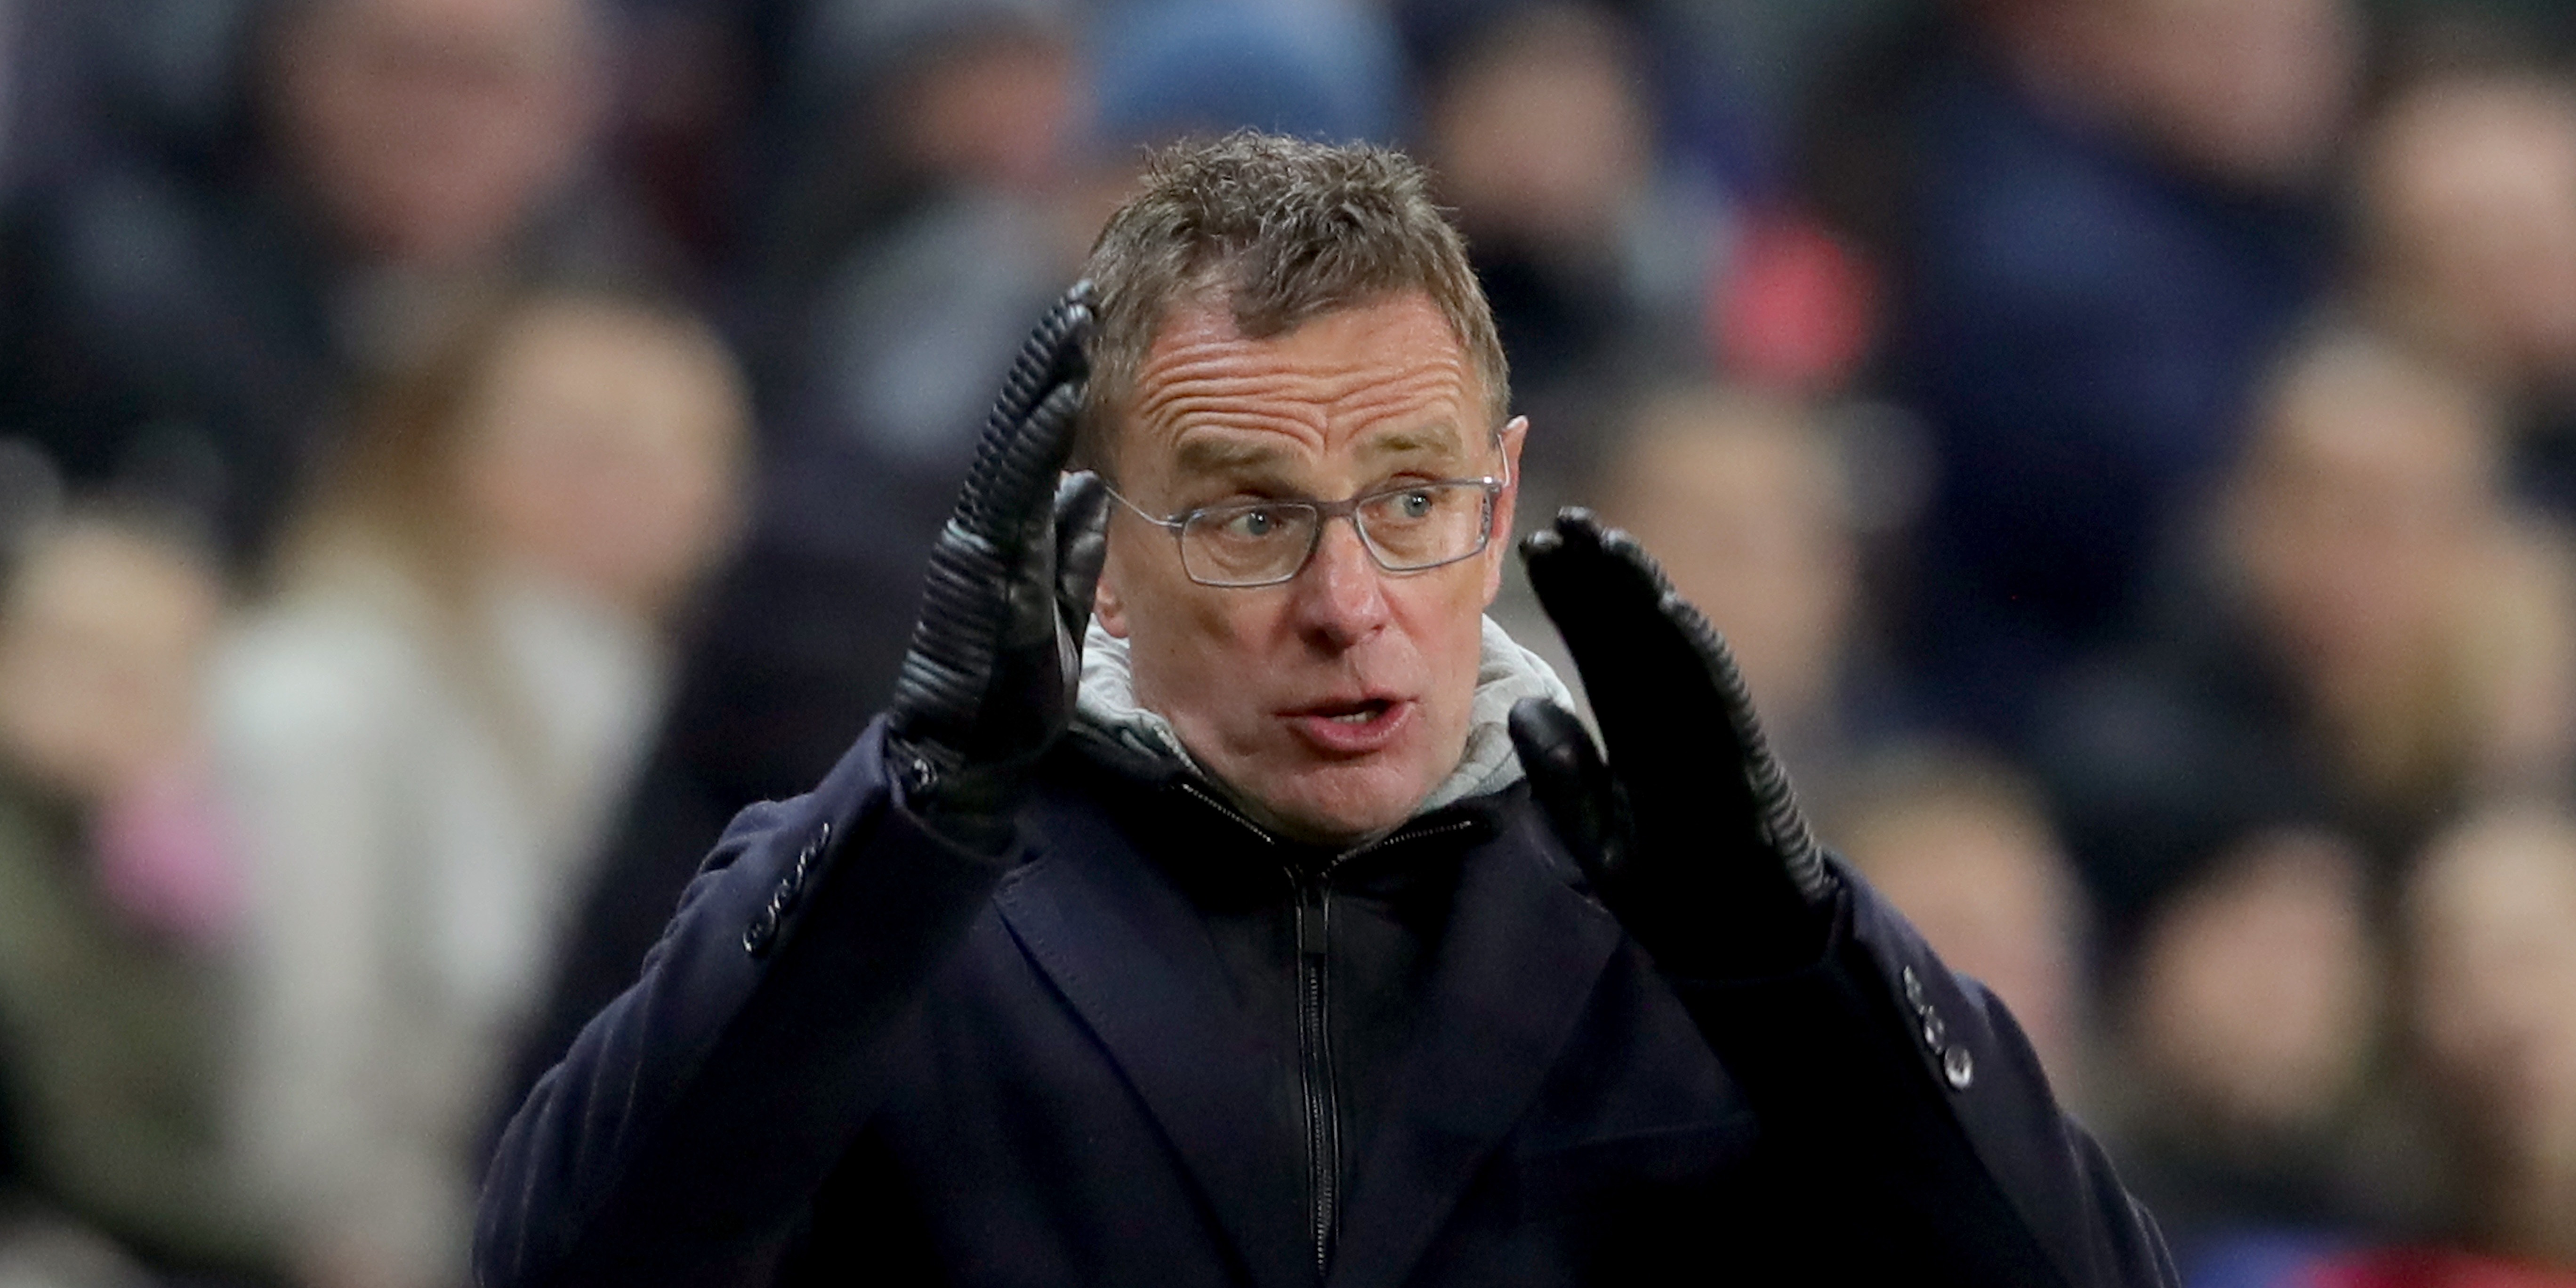 ‘Unfortunately…’ – Jurgen Klopp weighs in on Ralph Rangnick’s impending appointment as interim Man United boss